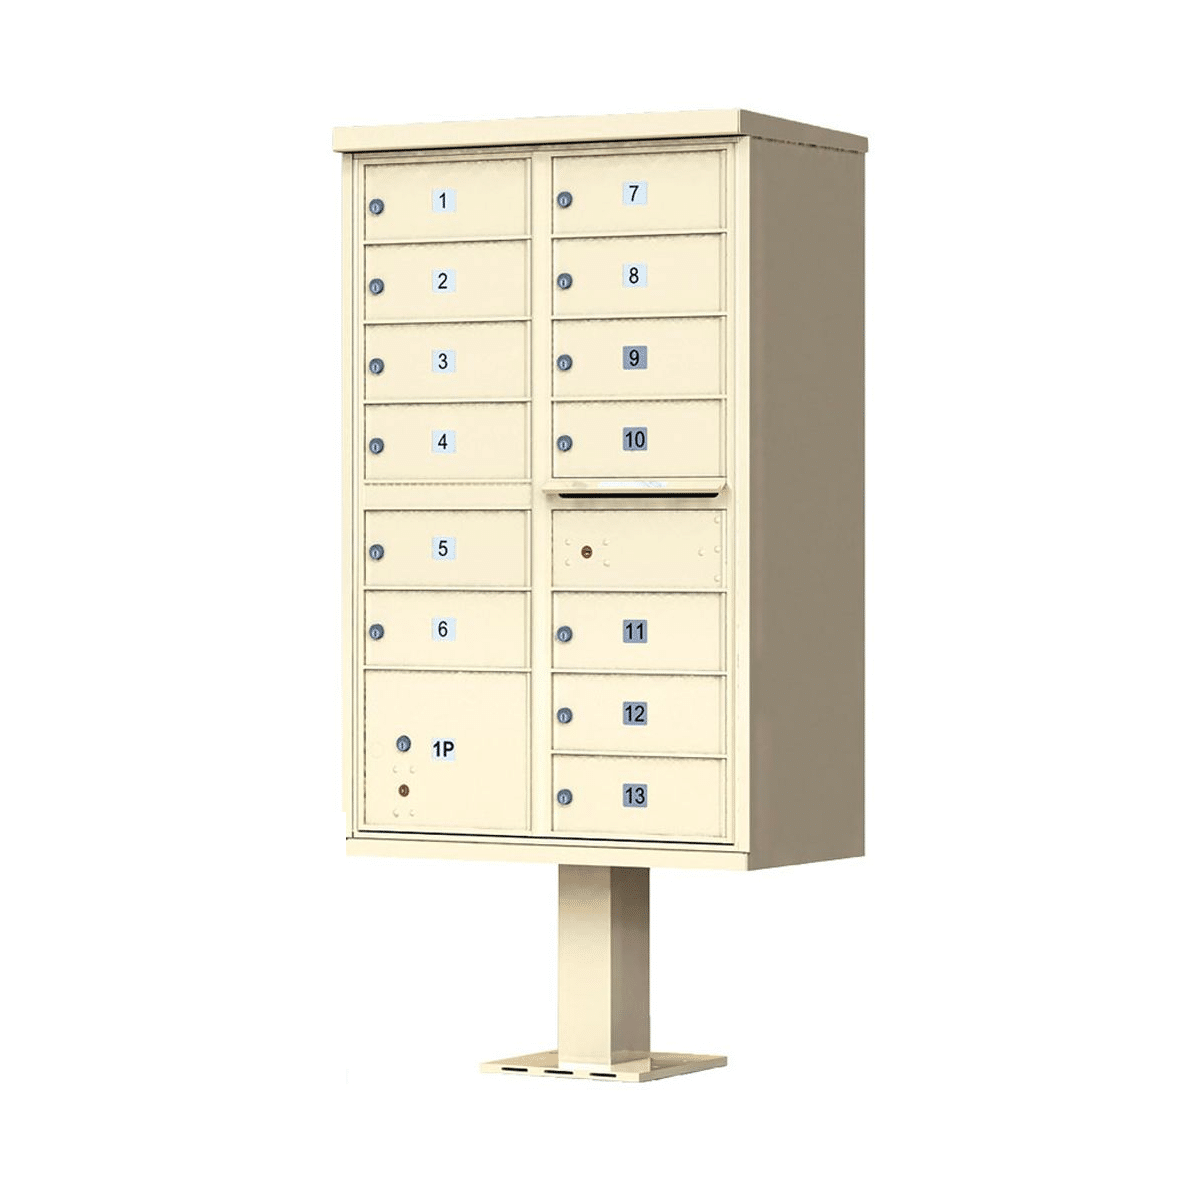 Florence CBU Cluster Mailbox - 13 Tenant Doors, 1 Parcel Locker Featured Image